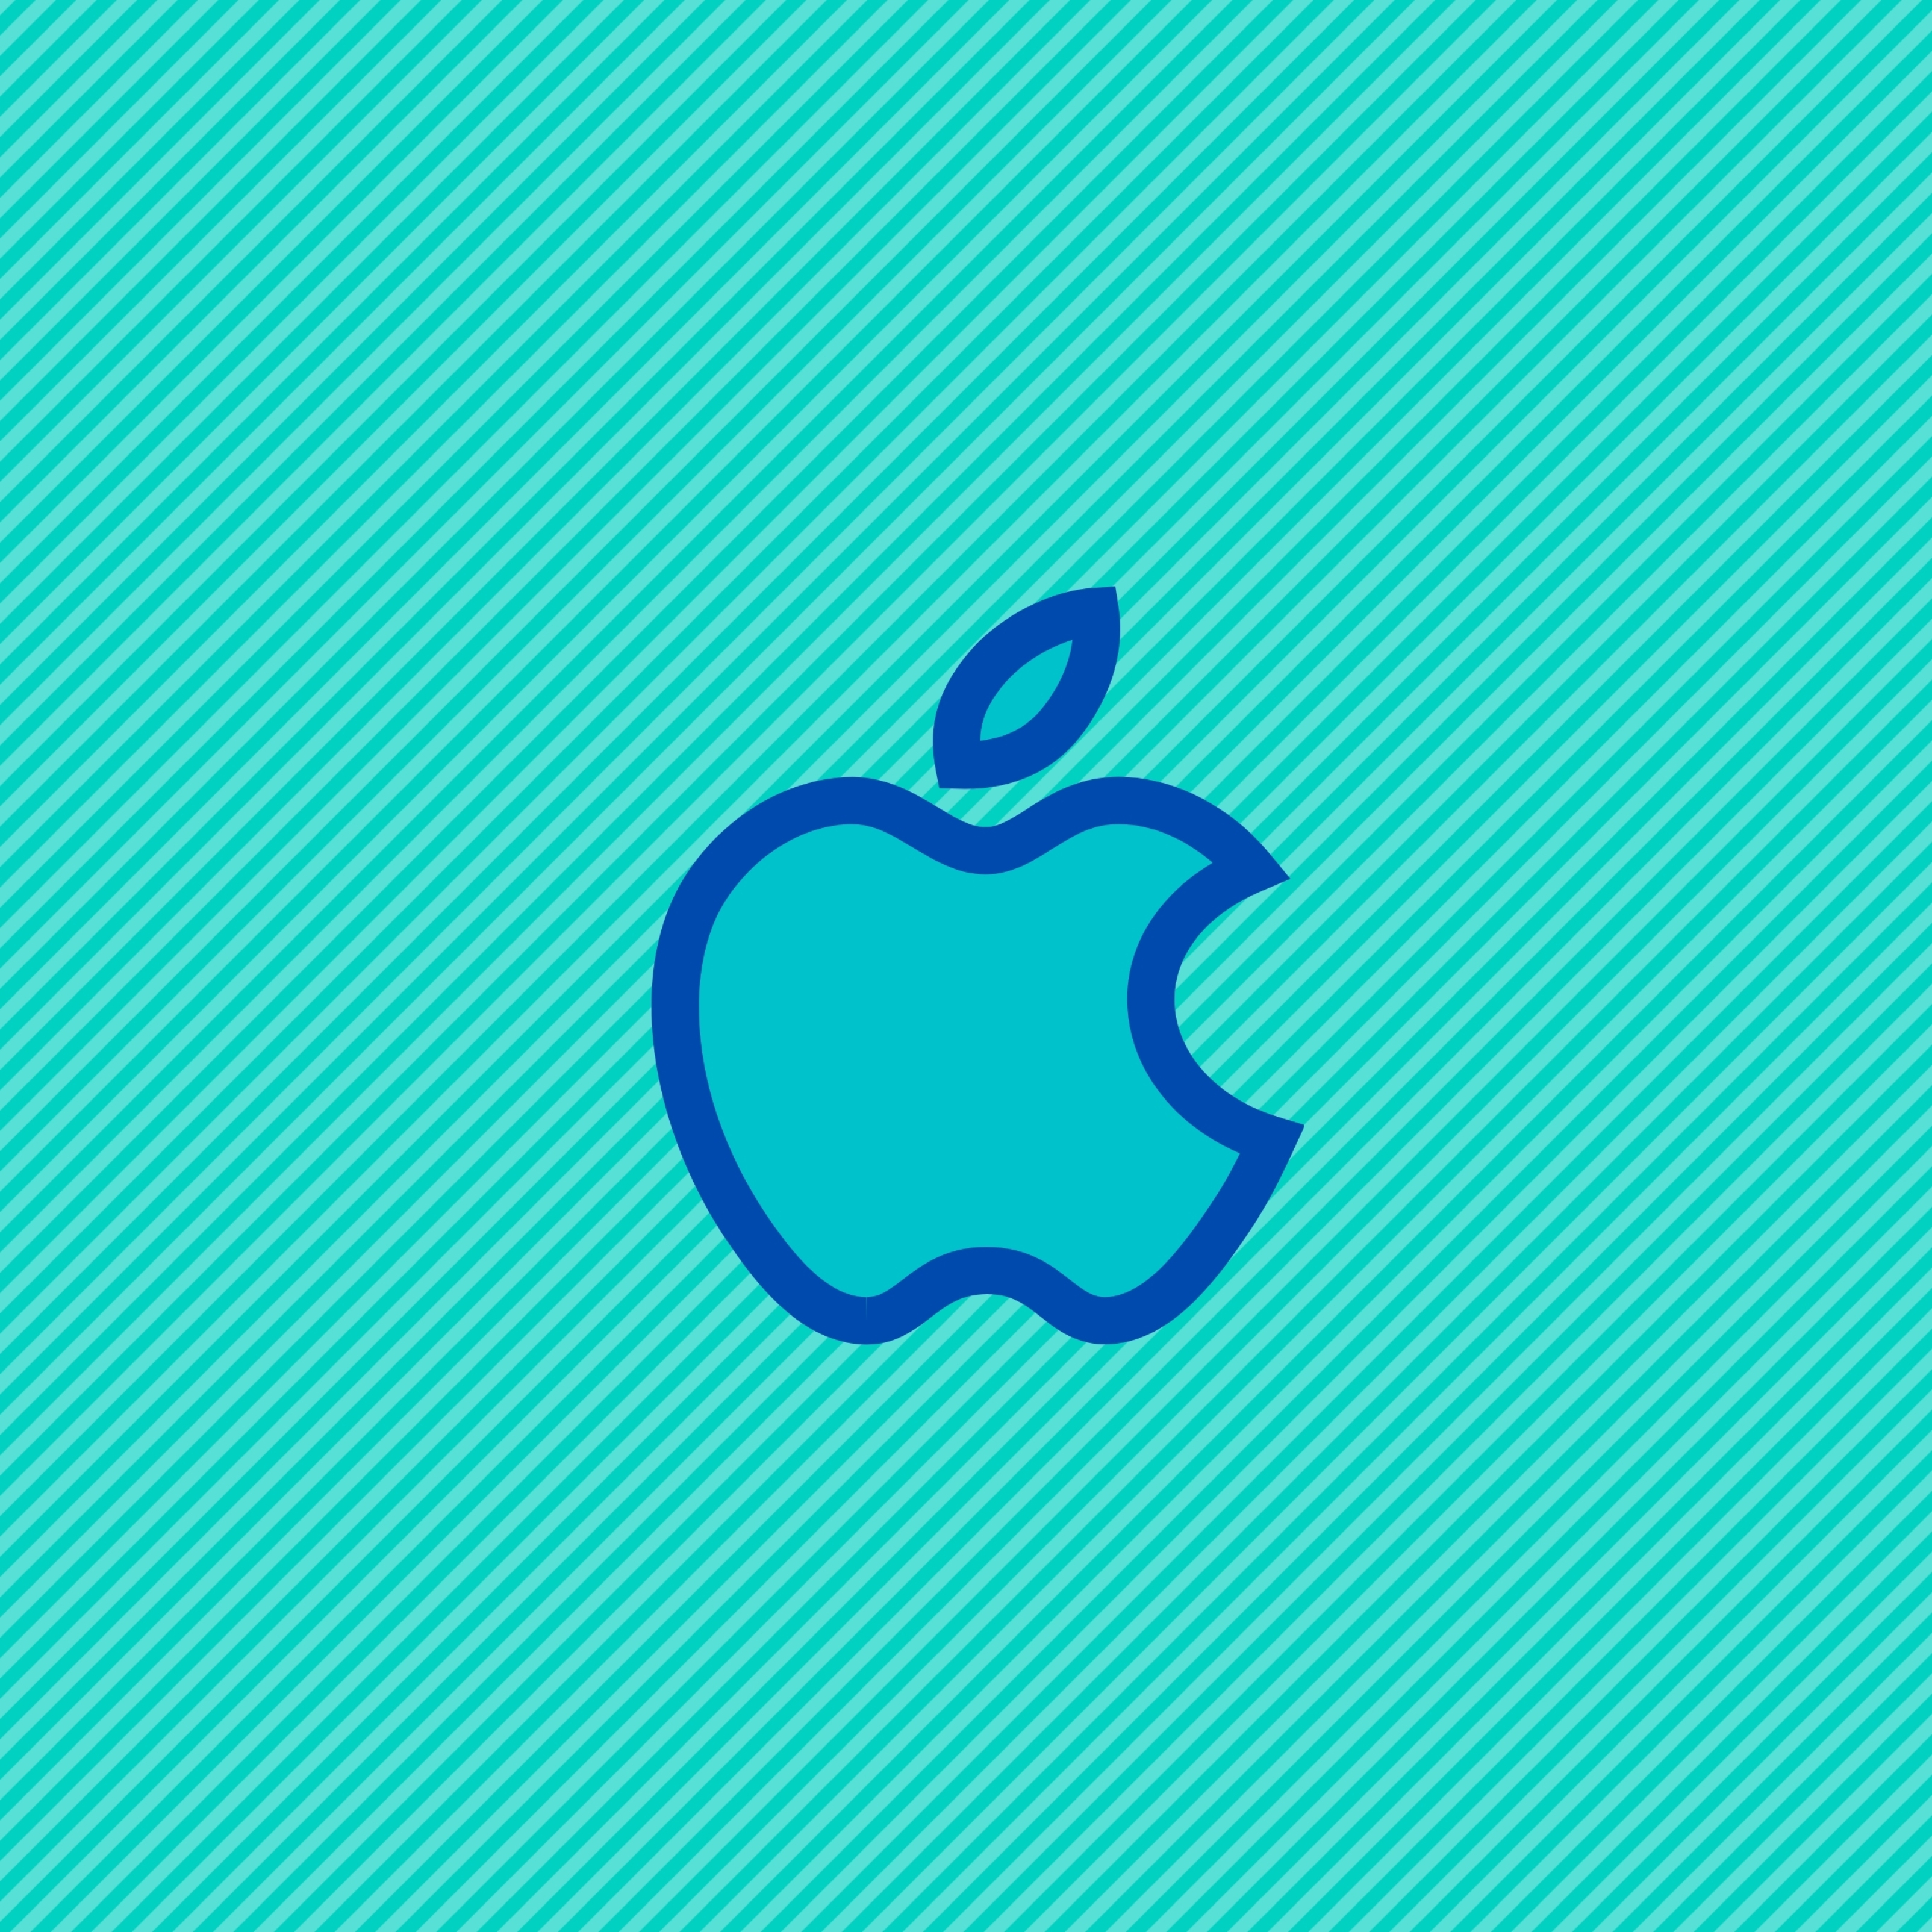 iPad Wallpapers Apple Logo Blue Stripes Background iPad Wallpaper 3208x3208 px